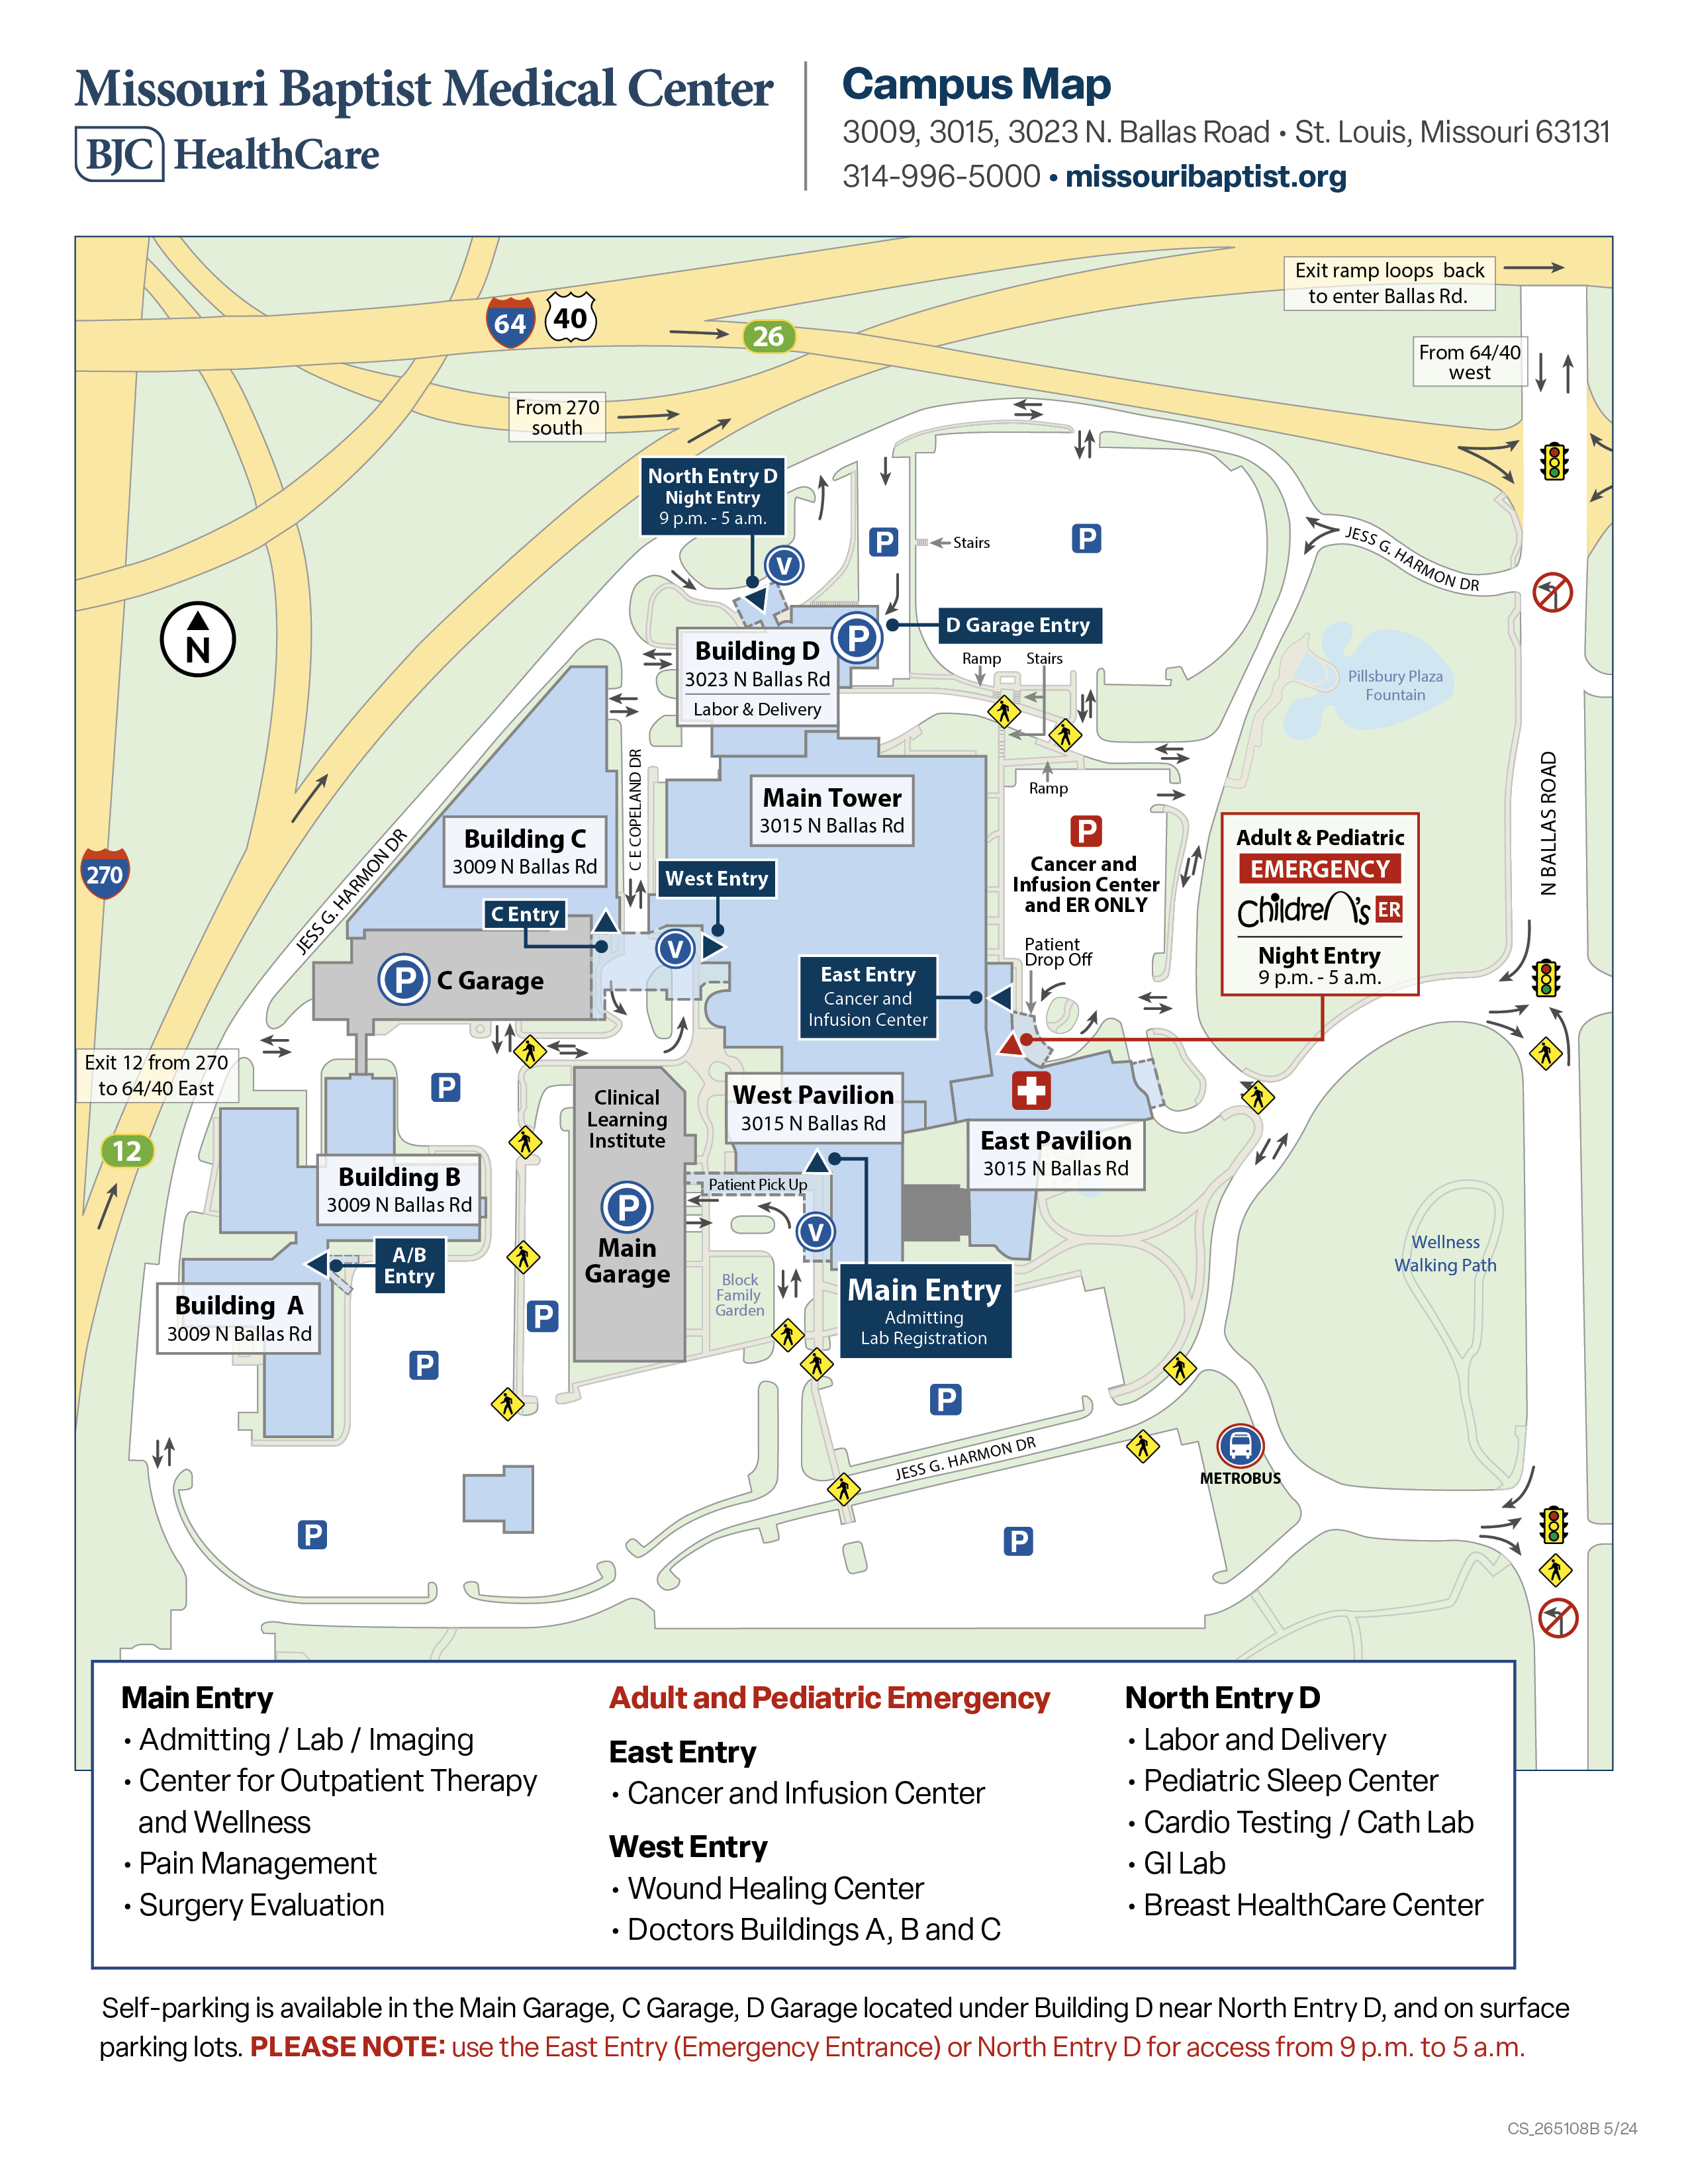 Missouri Baptist Medical Center Campus Map